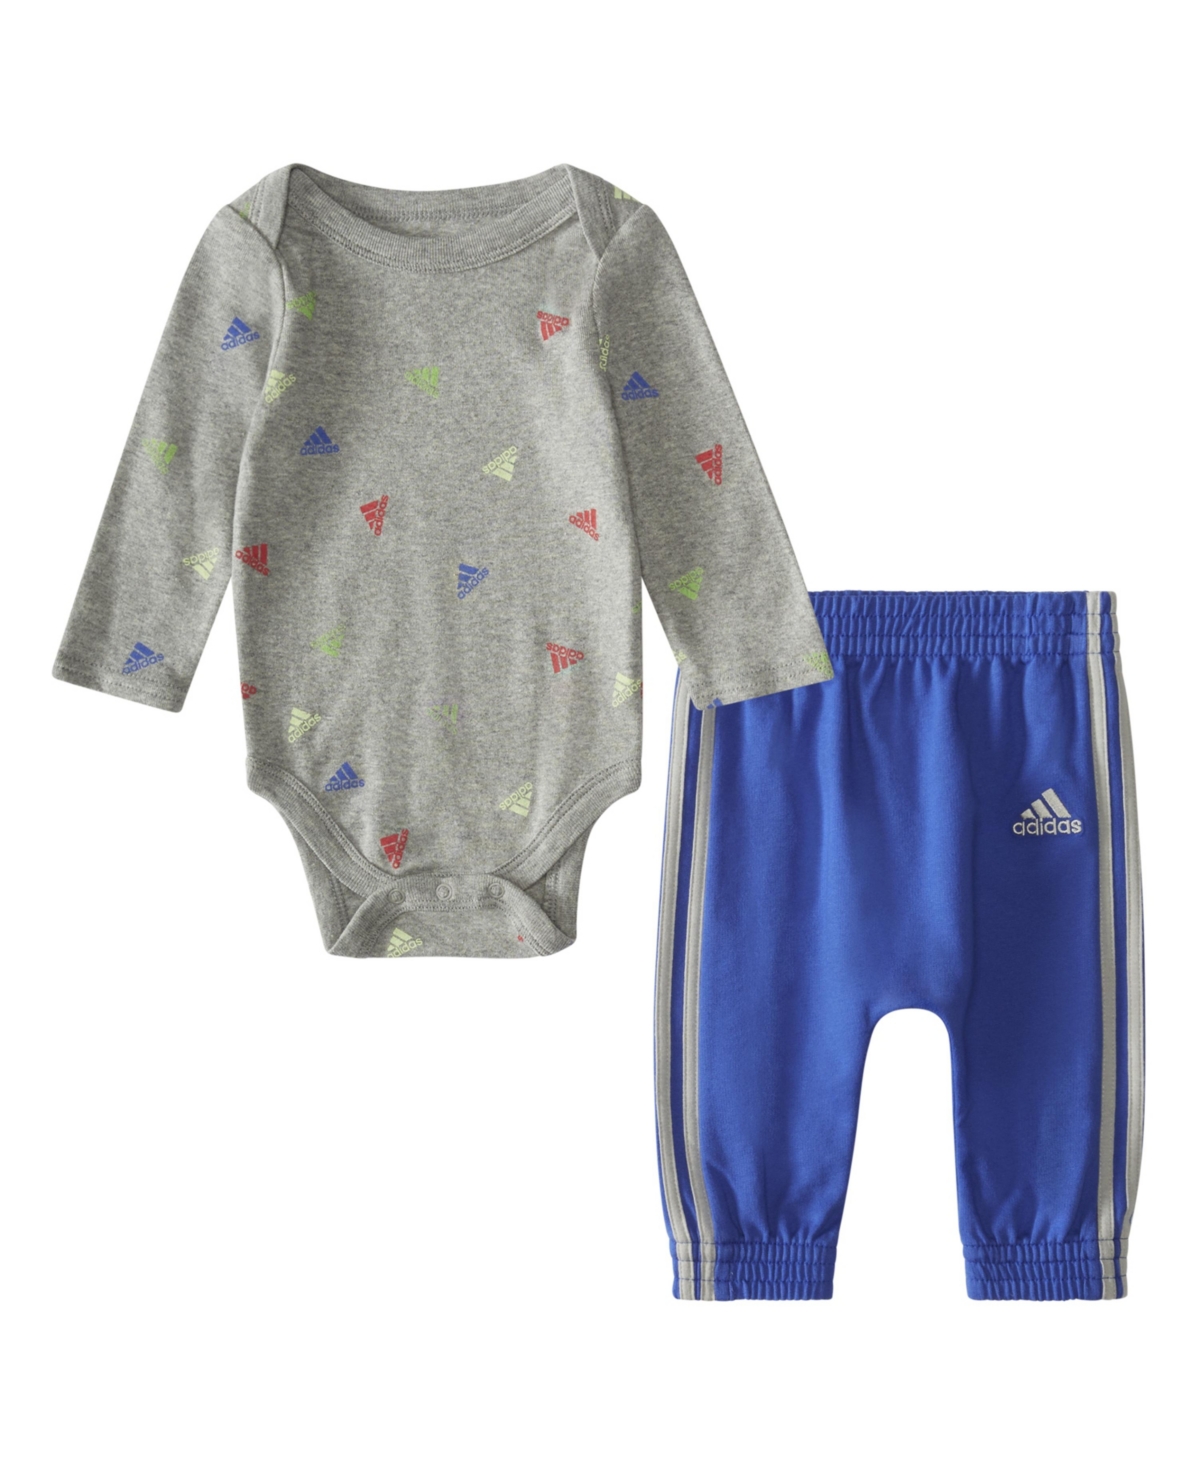 Adidas Originals Baby Boys Long Sleeve Printed Bodysuit And Joggers, 2 Piece Set In Medium Gray Heather